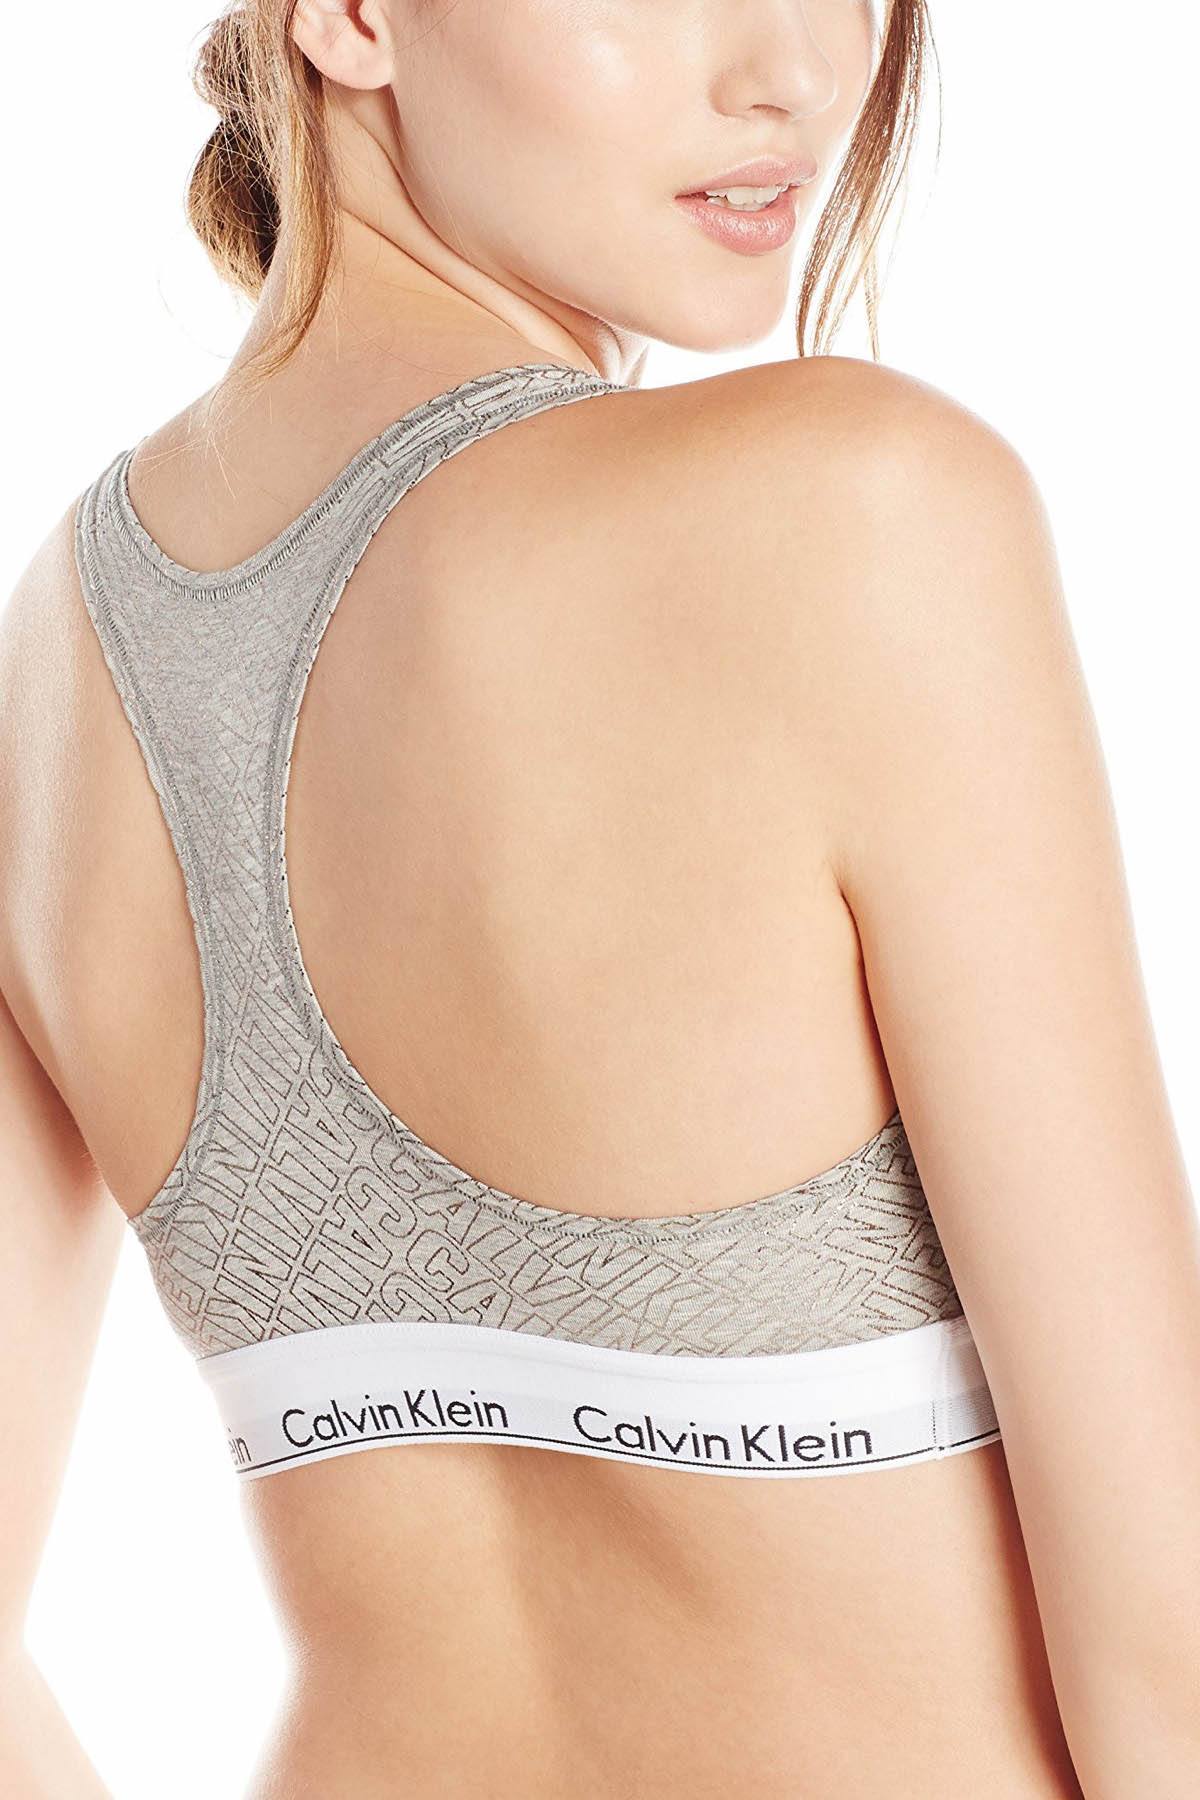 CalvinClein #summer • white teared shorts • grey Calvin Klein sports bra •  grey coat • fishtail braid • Calvin Klein • su…